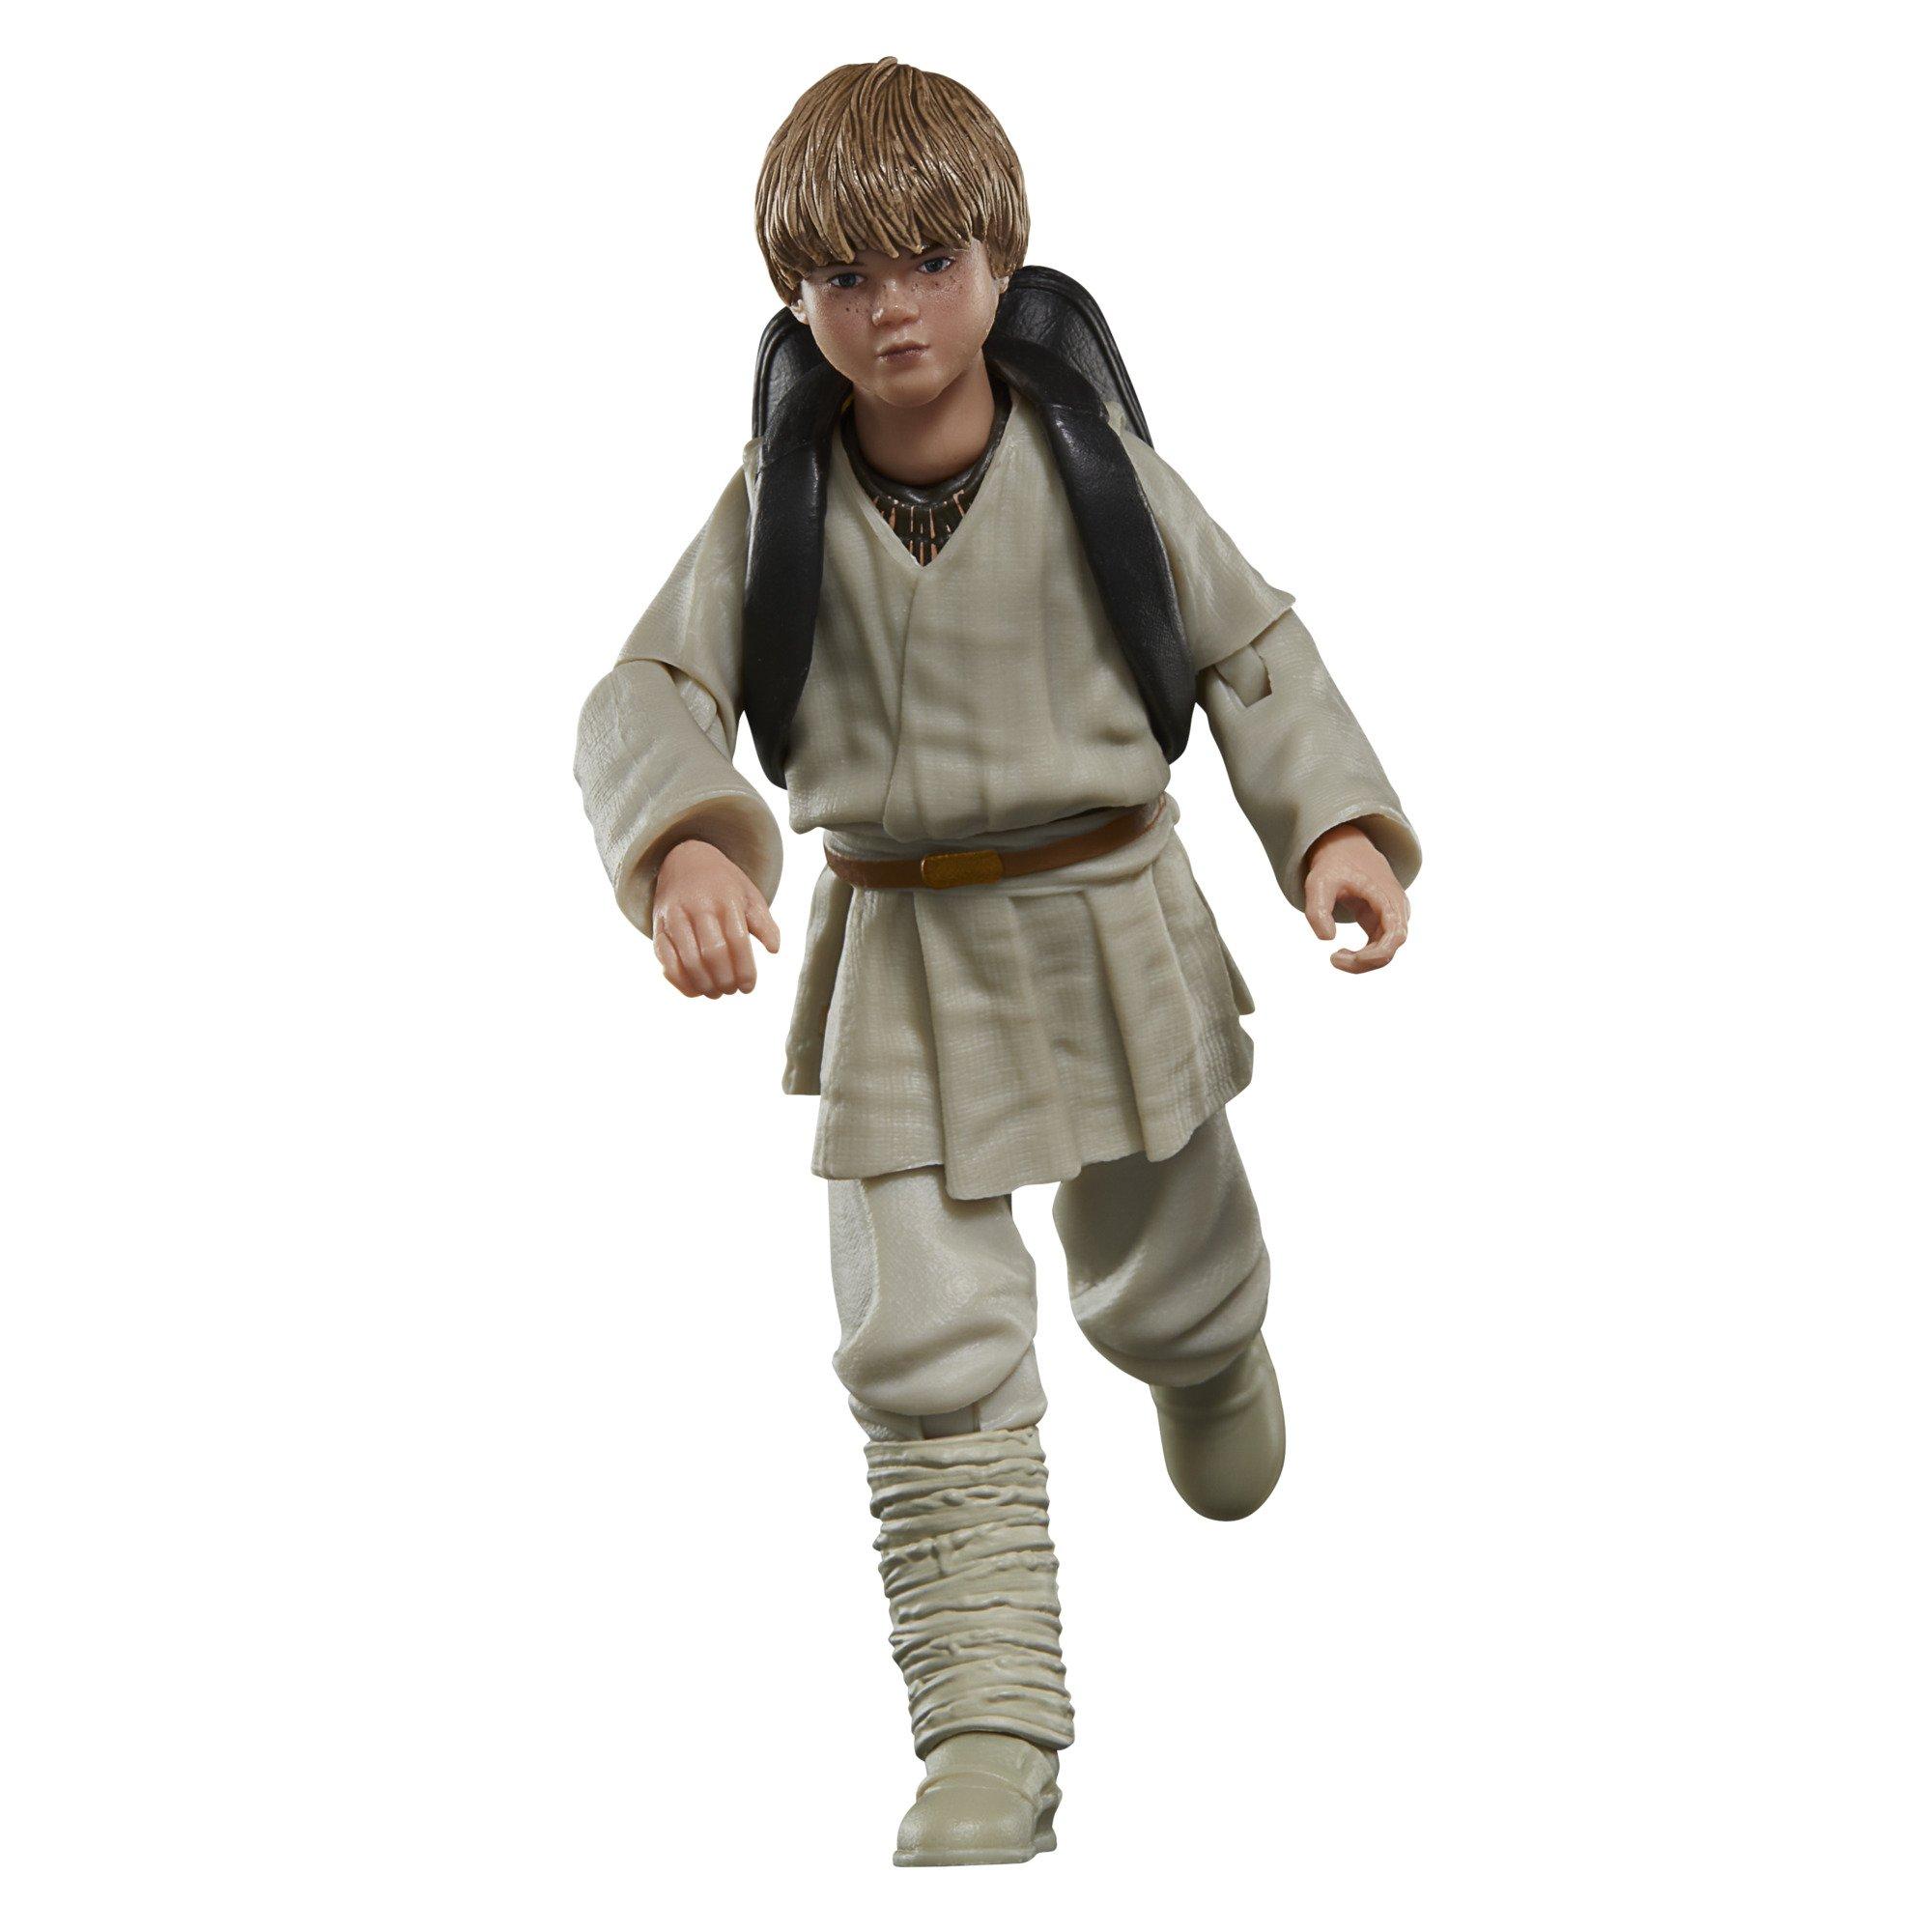 Hasbro Star Wars: The Black Series Star Wars: The Phantom Menace Anakin Skywalker 6-in Action Figure